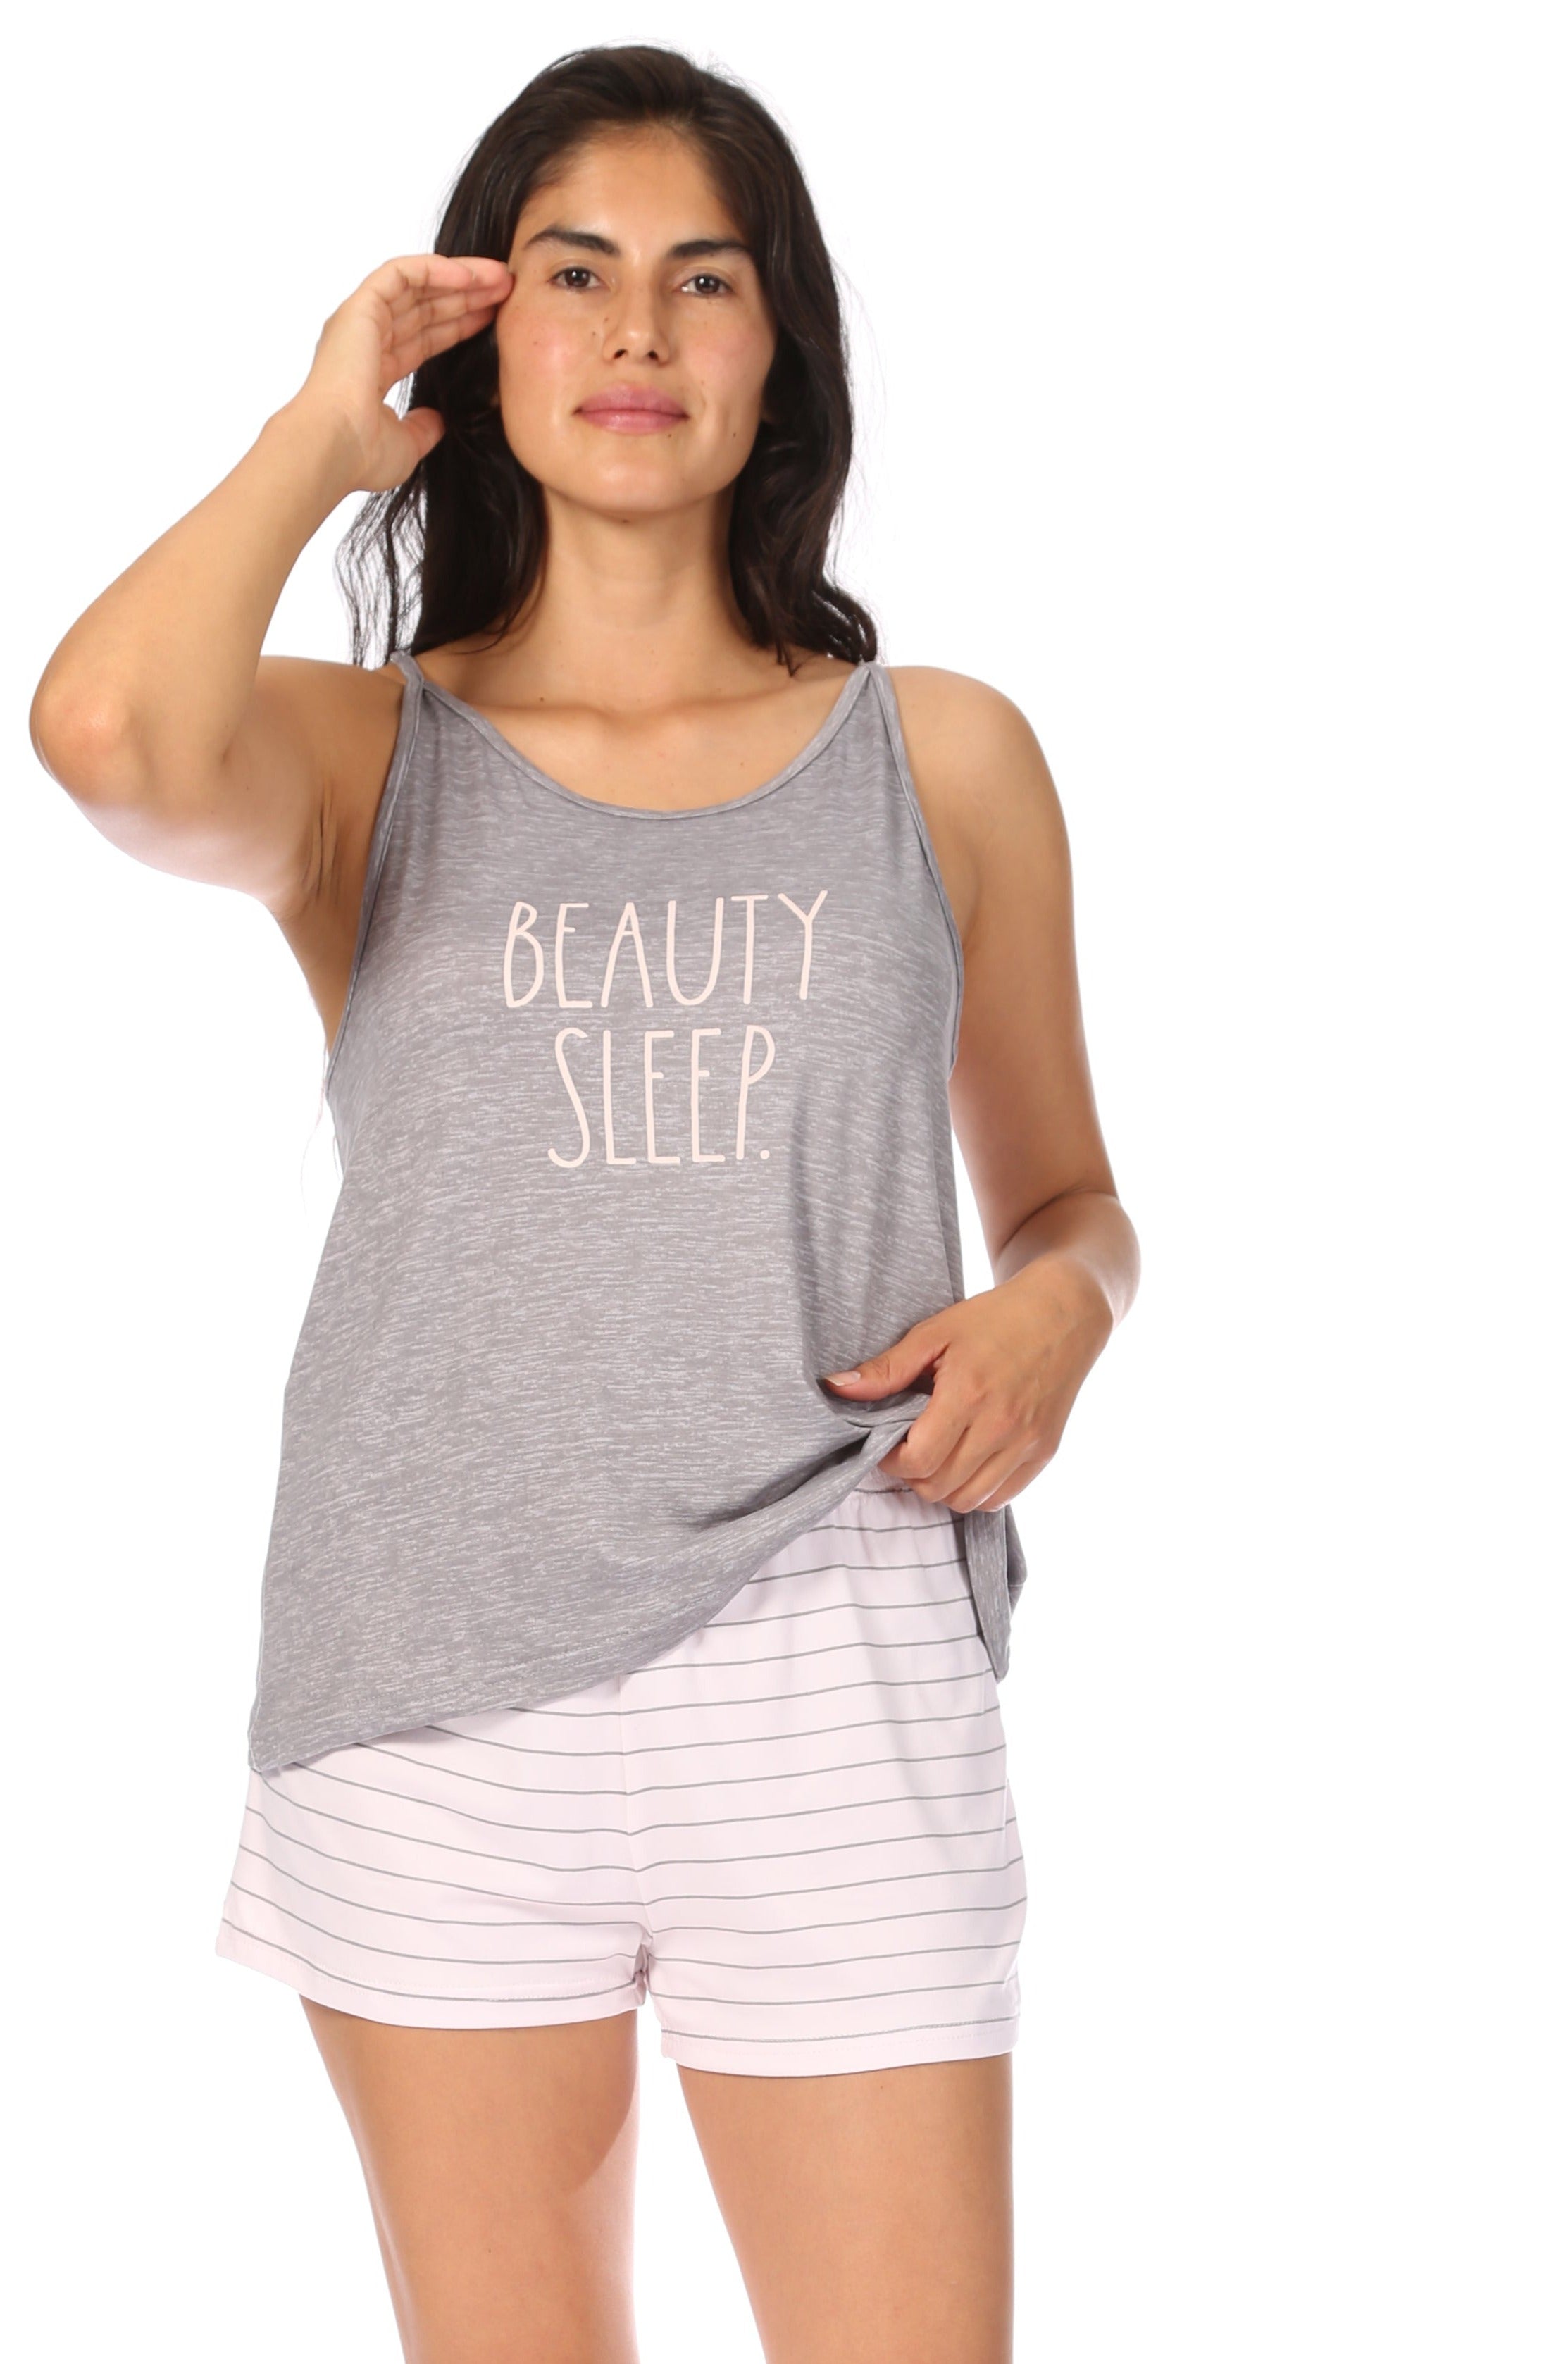 Women's "BEAUTY SLEEP" Strappy Cami and Elastic Waistband Shorts Pajama Set - Rae Dunn Wear